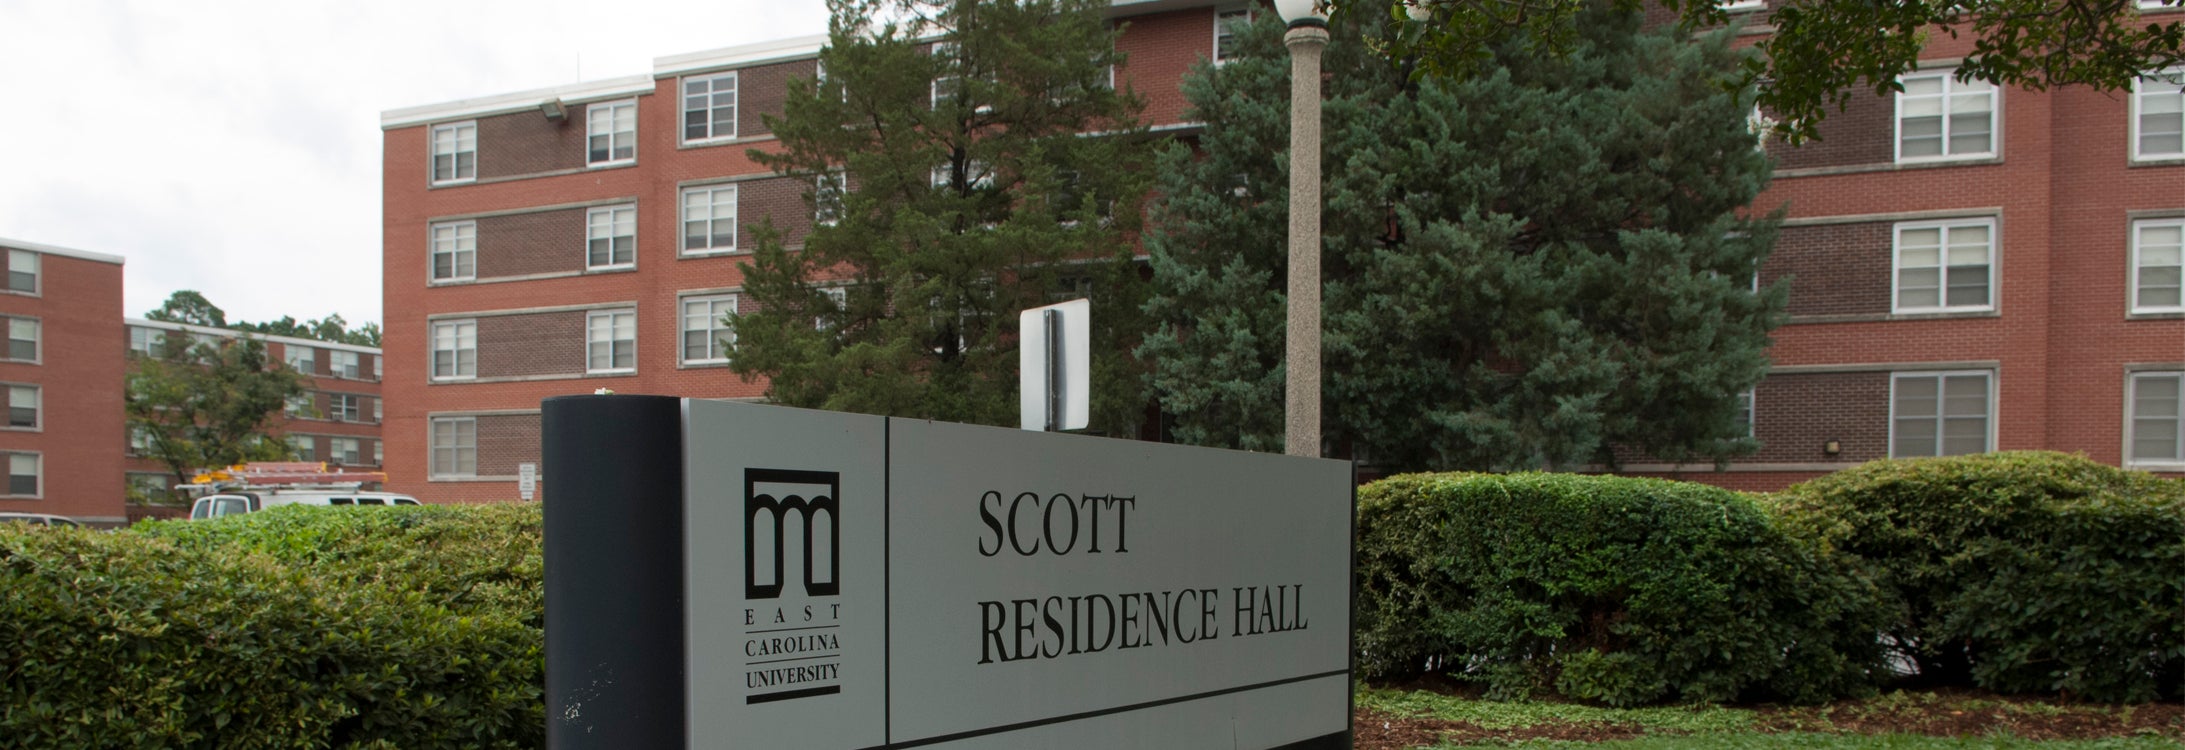 Scott residence hall